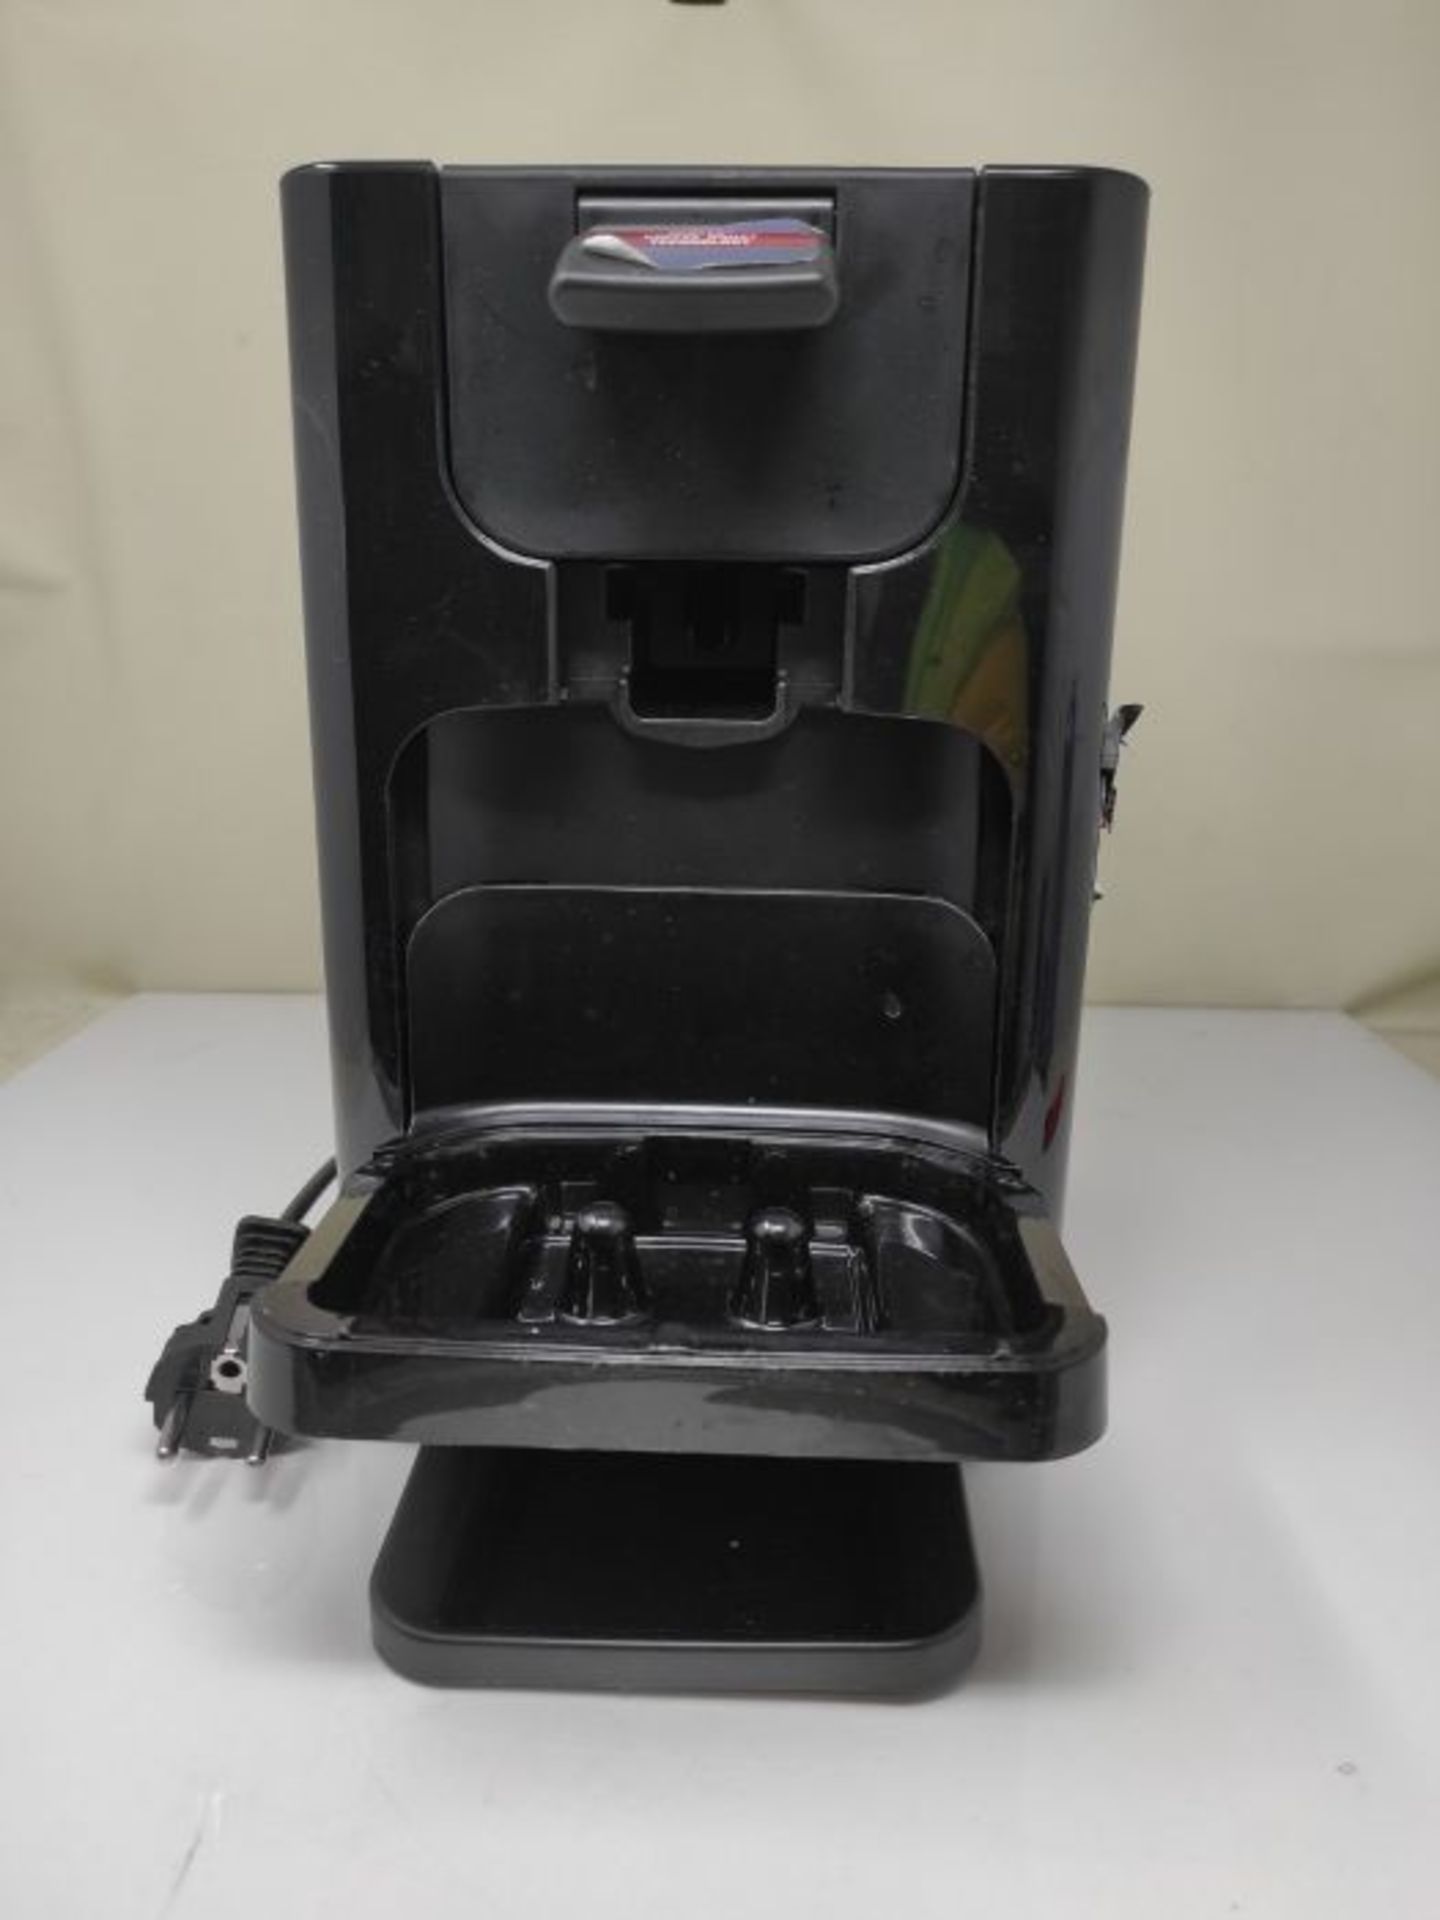 RRP £85.00 Senseo Quadrante hd7865/60 Coffee Machine in Capsules 1.2L 8 Cups Black - Coffee ( - Image 3 of 3